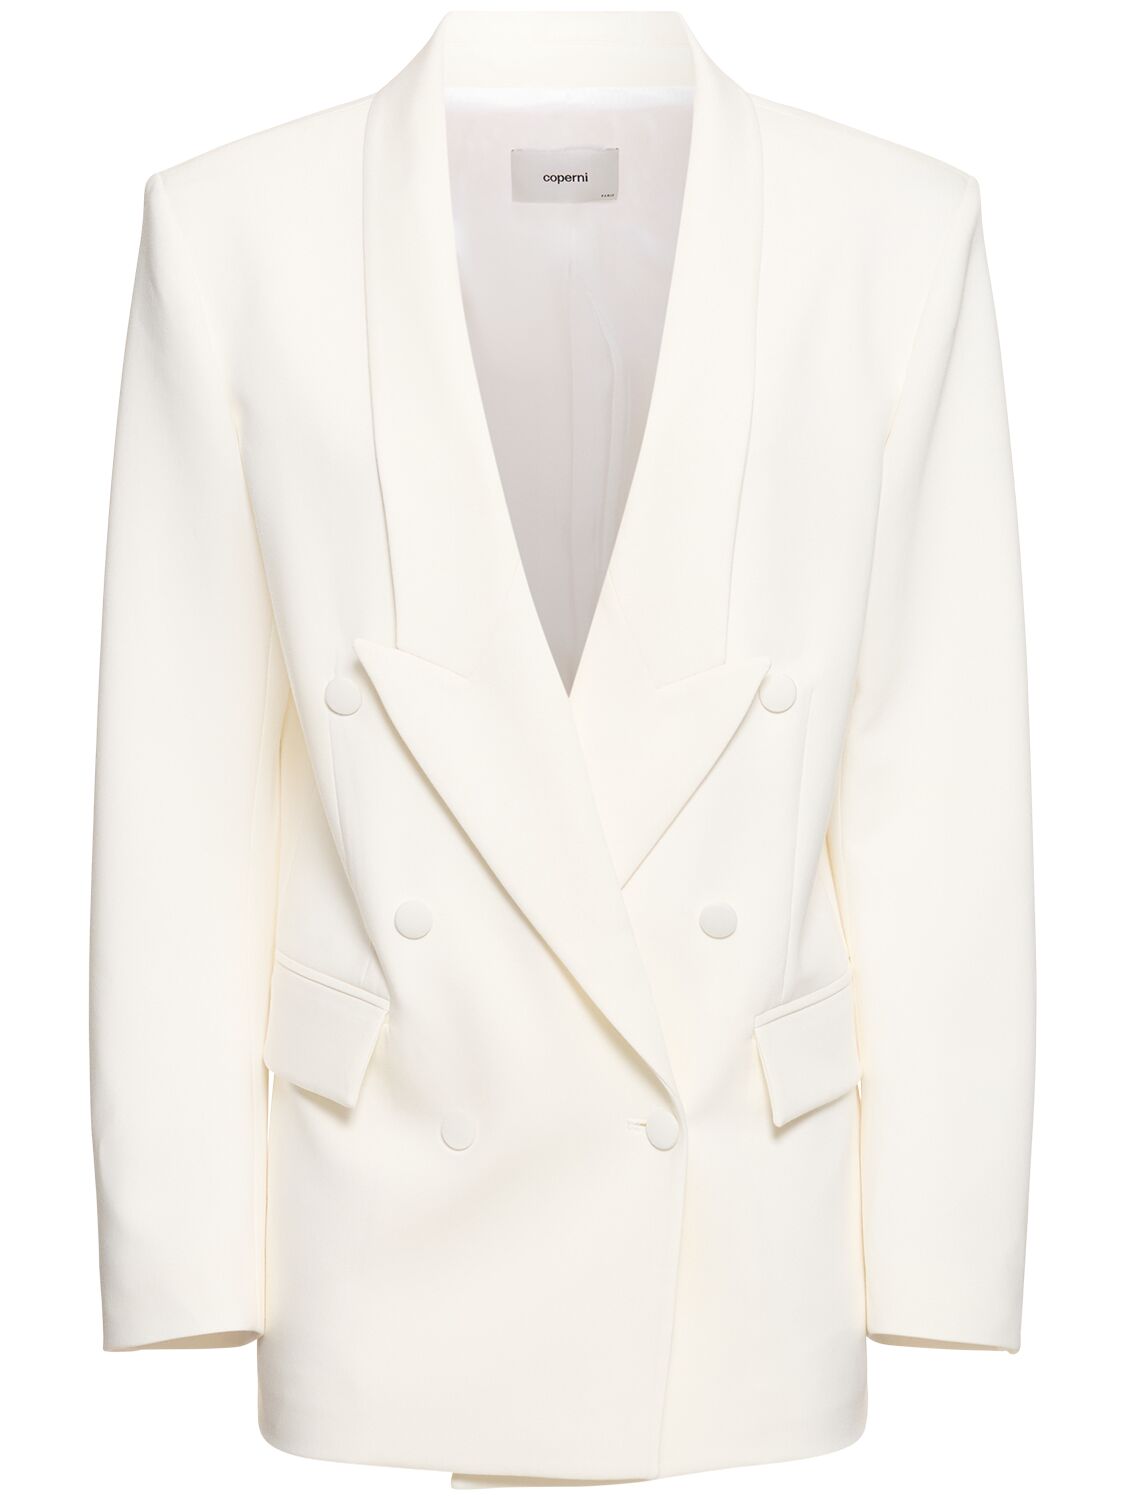 Coperni Tailored Double Breast Jacket In White